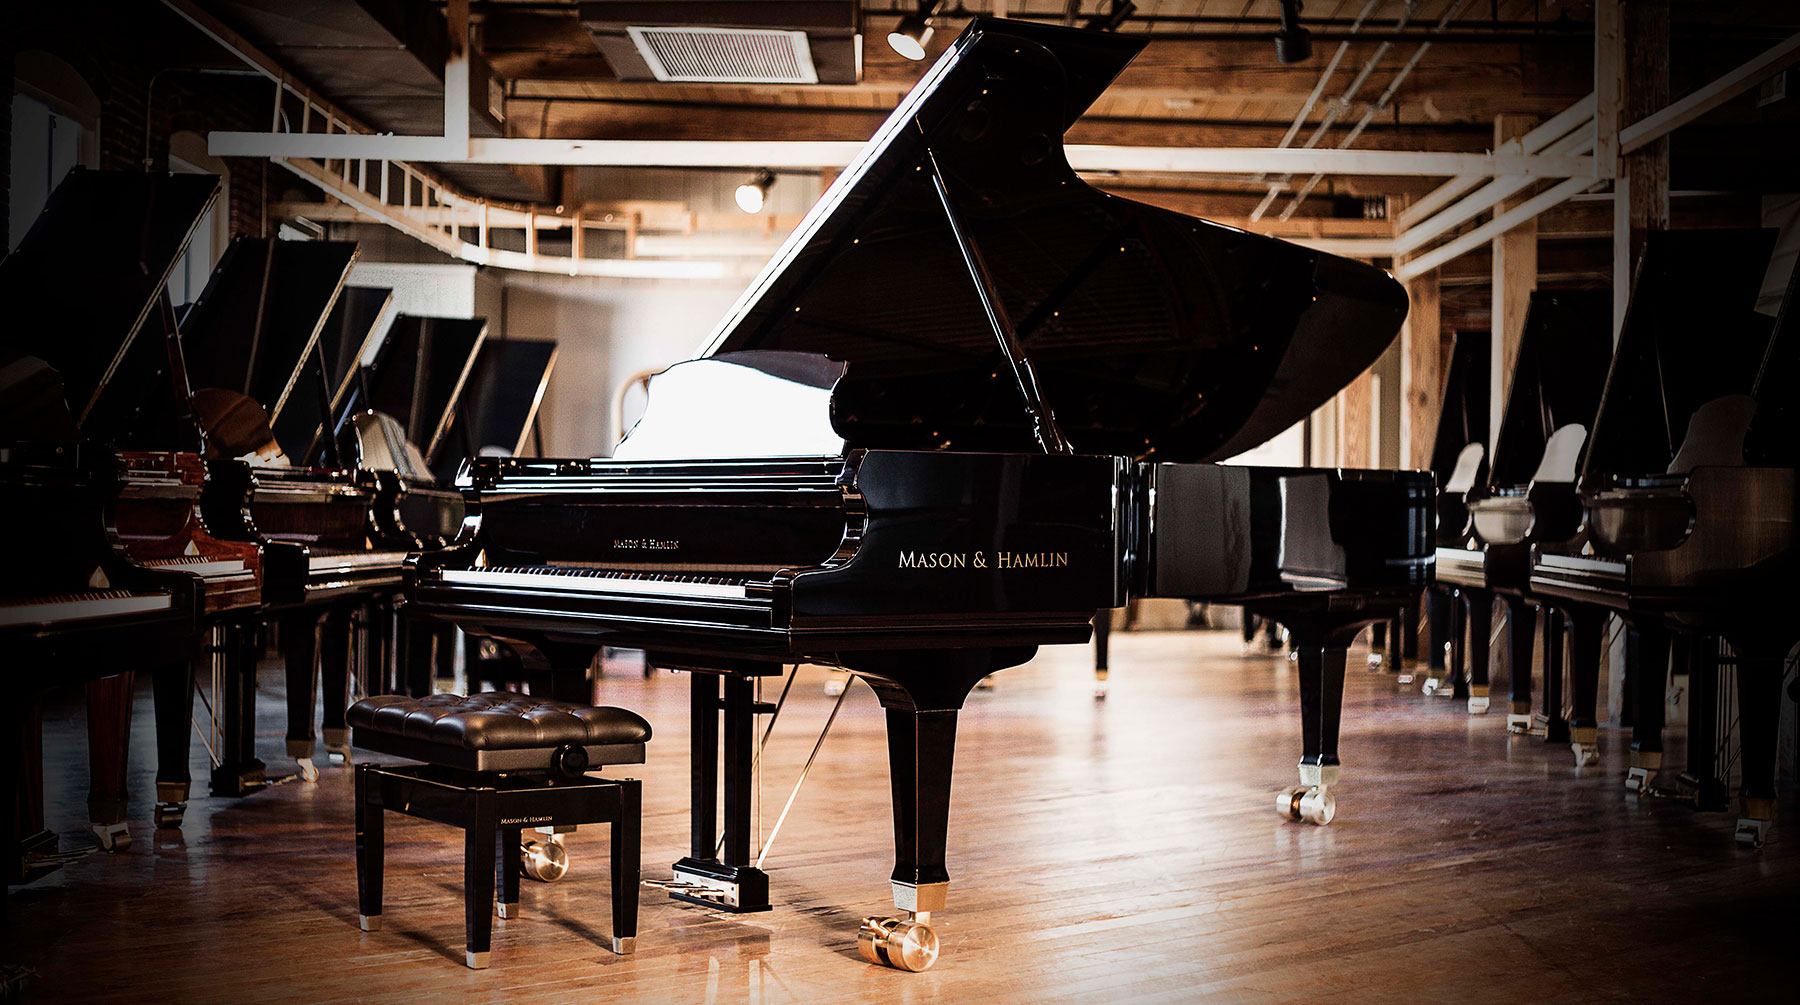 Mason & Hamlin grand piano in factory showroom